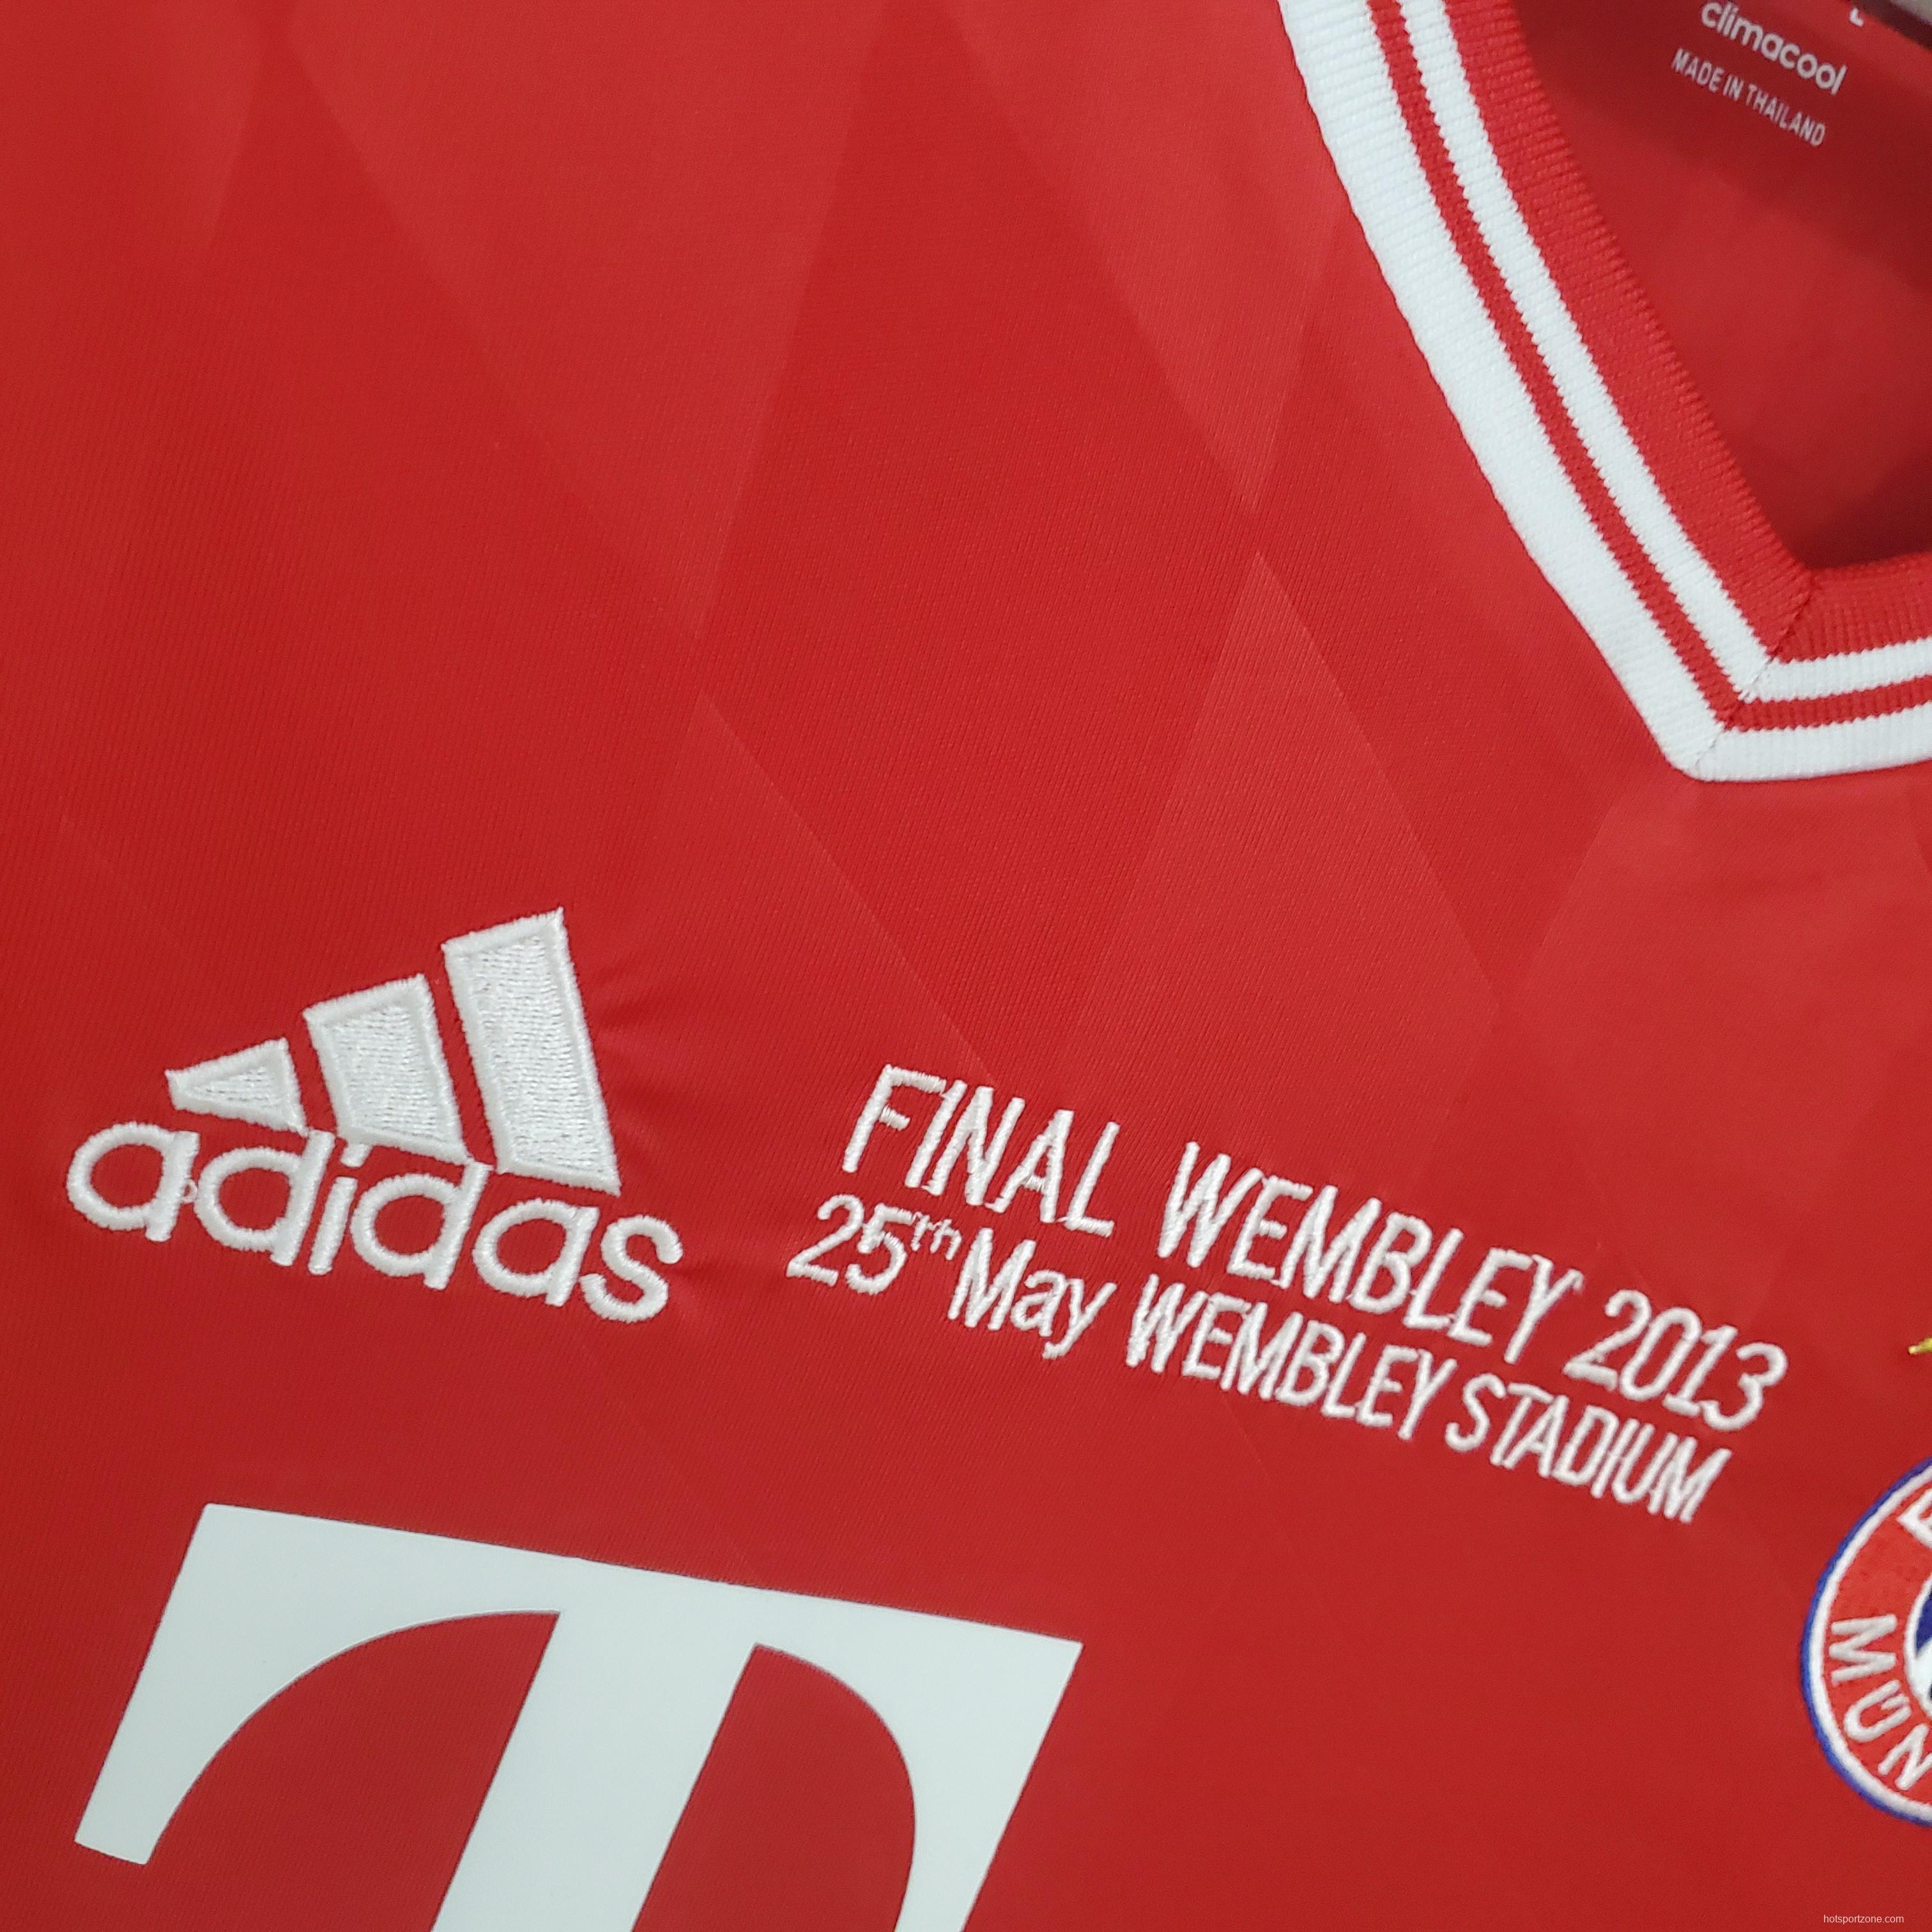 Retro long sleeve Bayern Munich 12/13 Champions League home Soccer Jersey